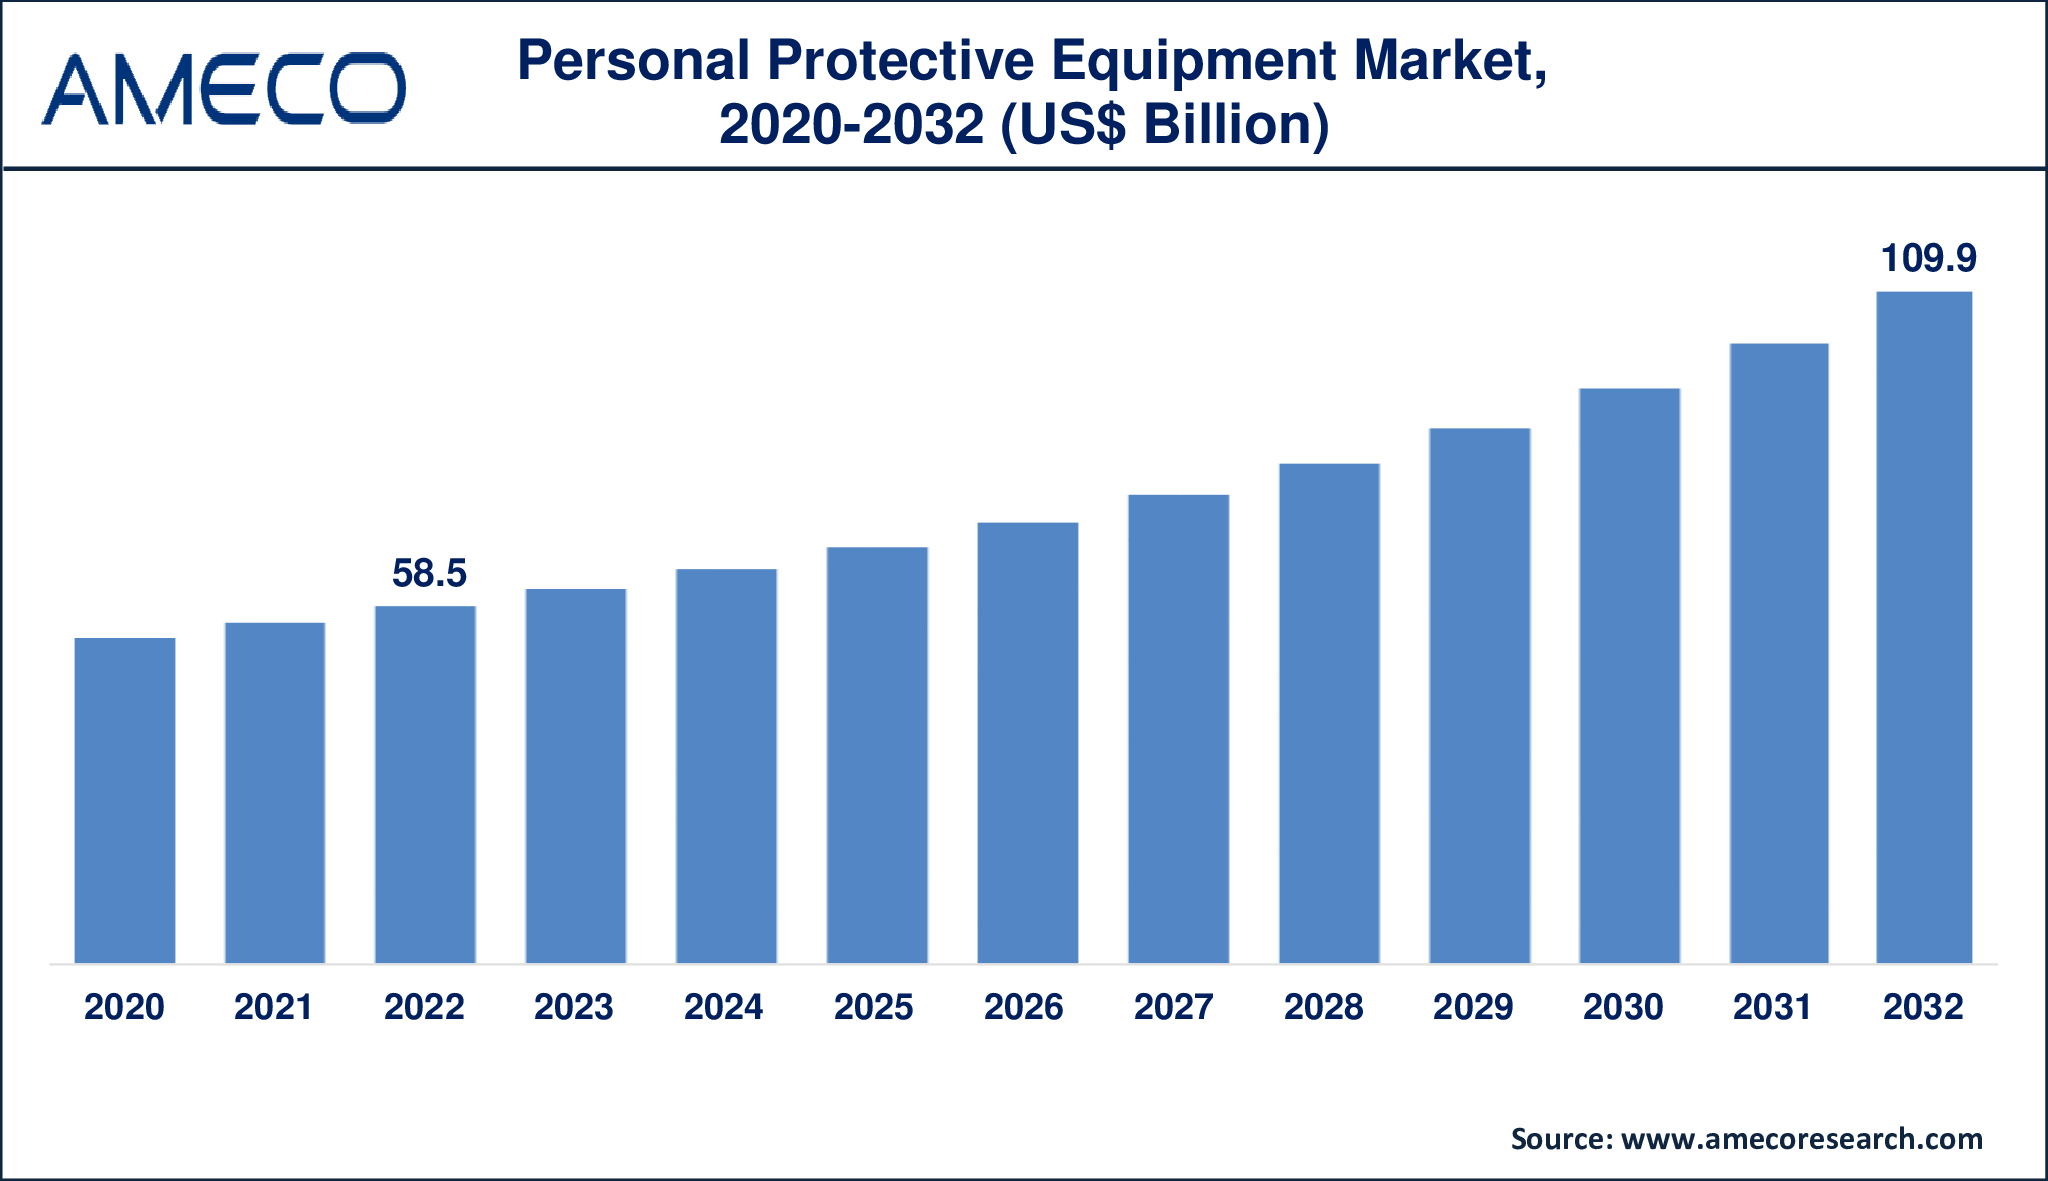 Personal Protective Equipment Market Dynamics